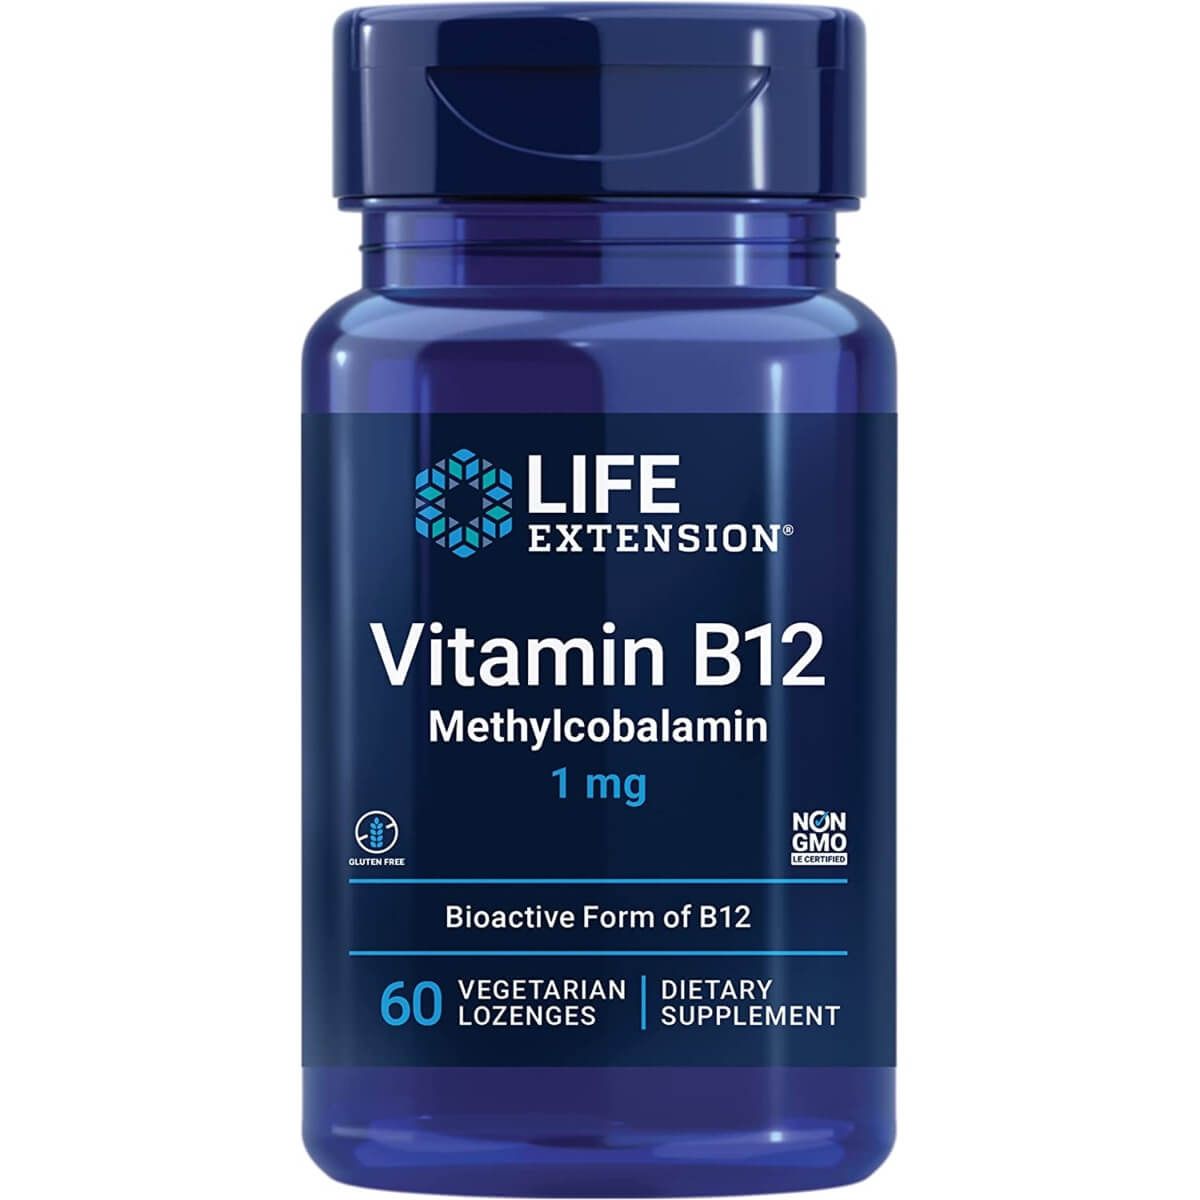 Photos - Vitamins & Minerals Life Extension Vitamin B12 Methylcobalamin 1 mg 60 Vegetarian Lozenges PBW 